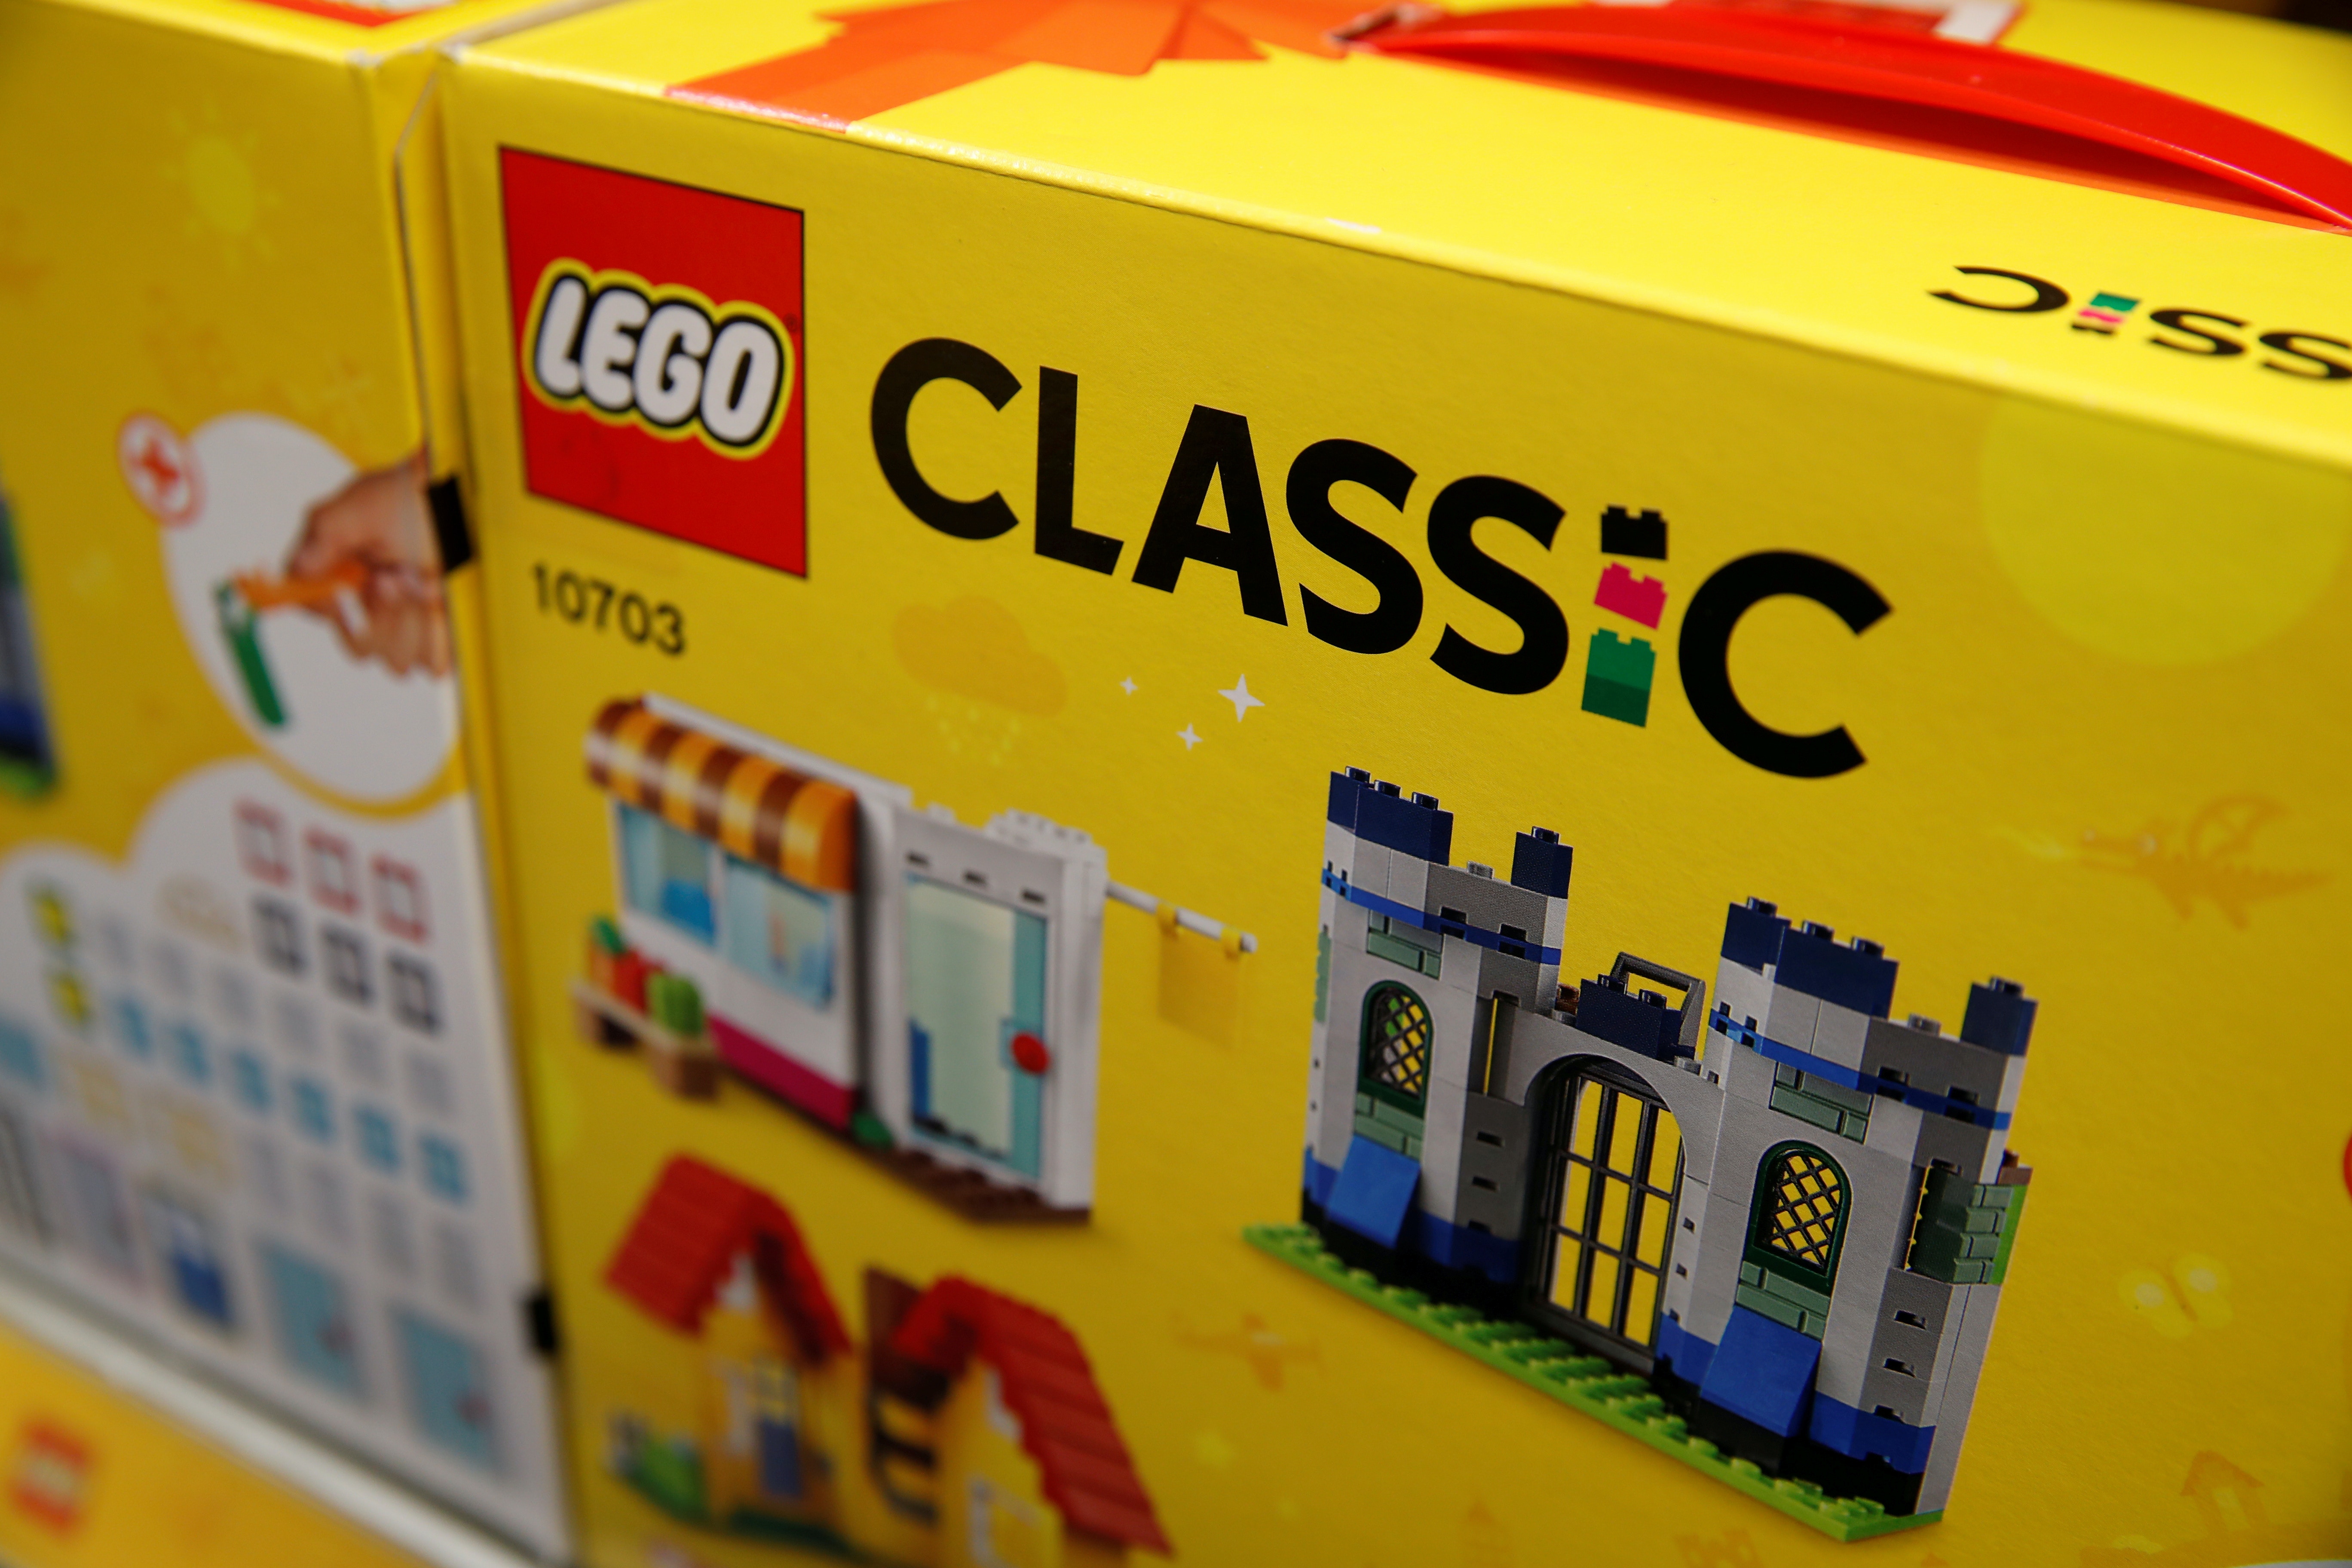 Lego減少企業碳排放量明年起淘汰塑膠袋包裝全因收他們來信 香港01 世界專題